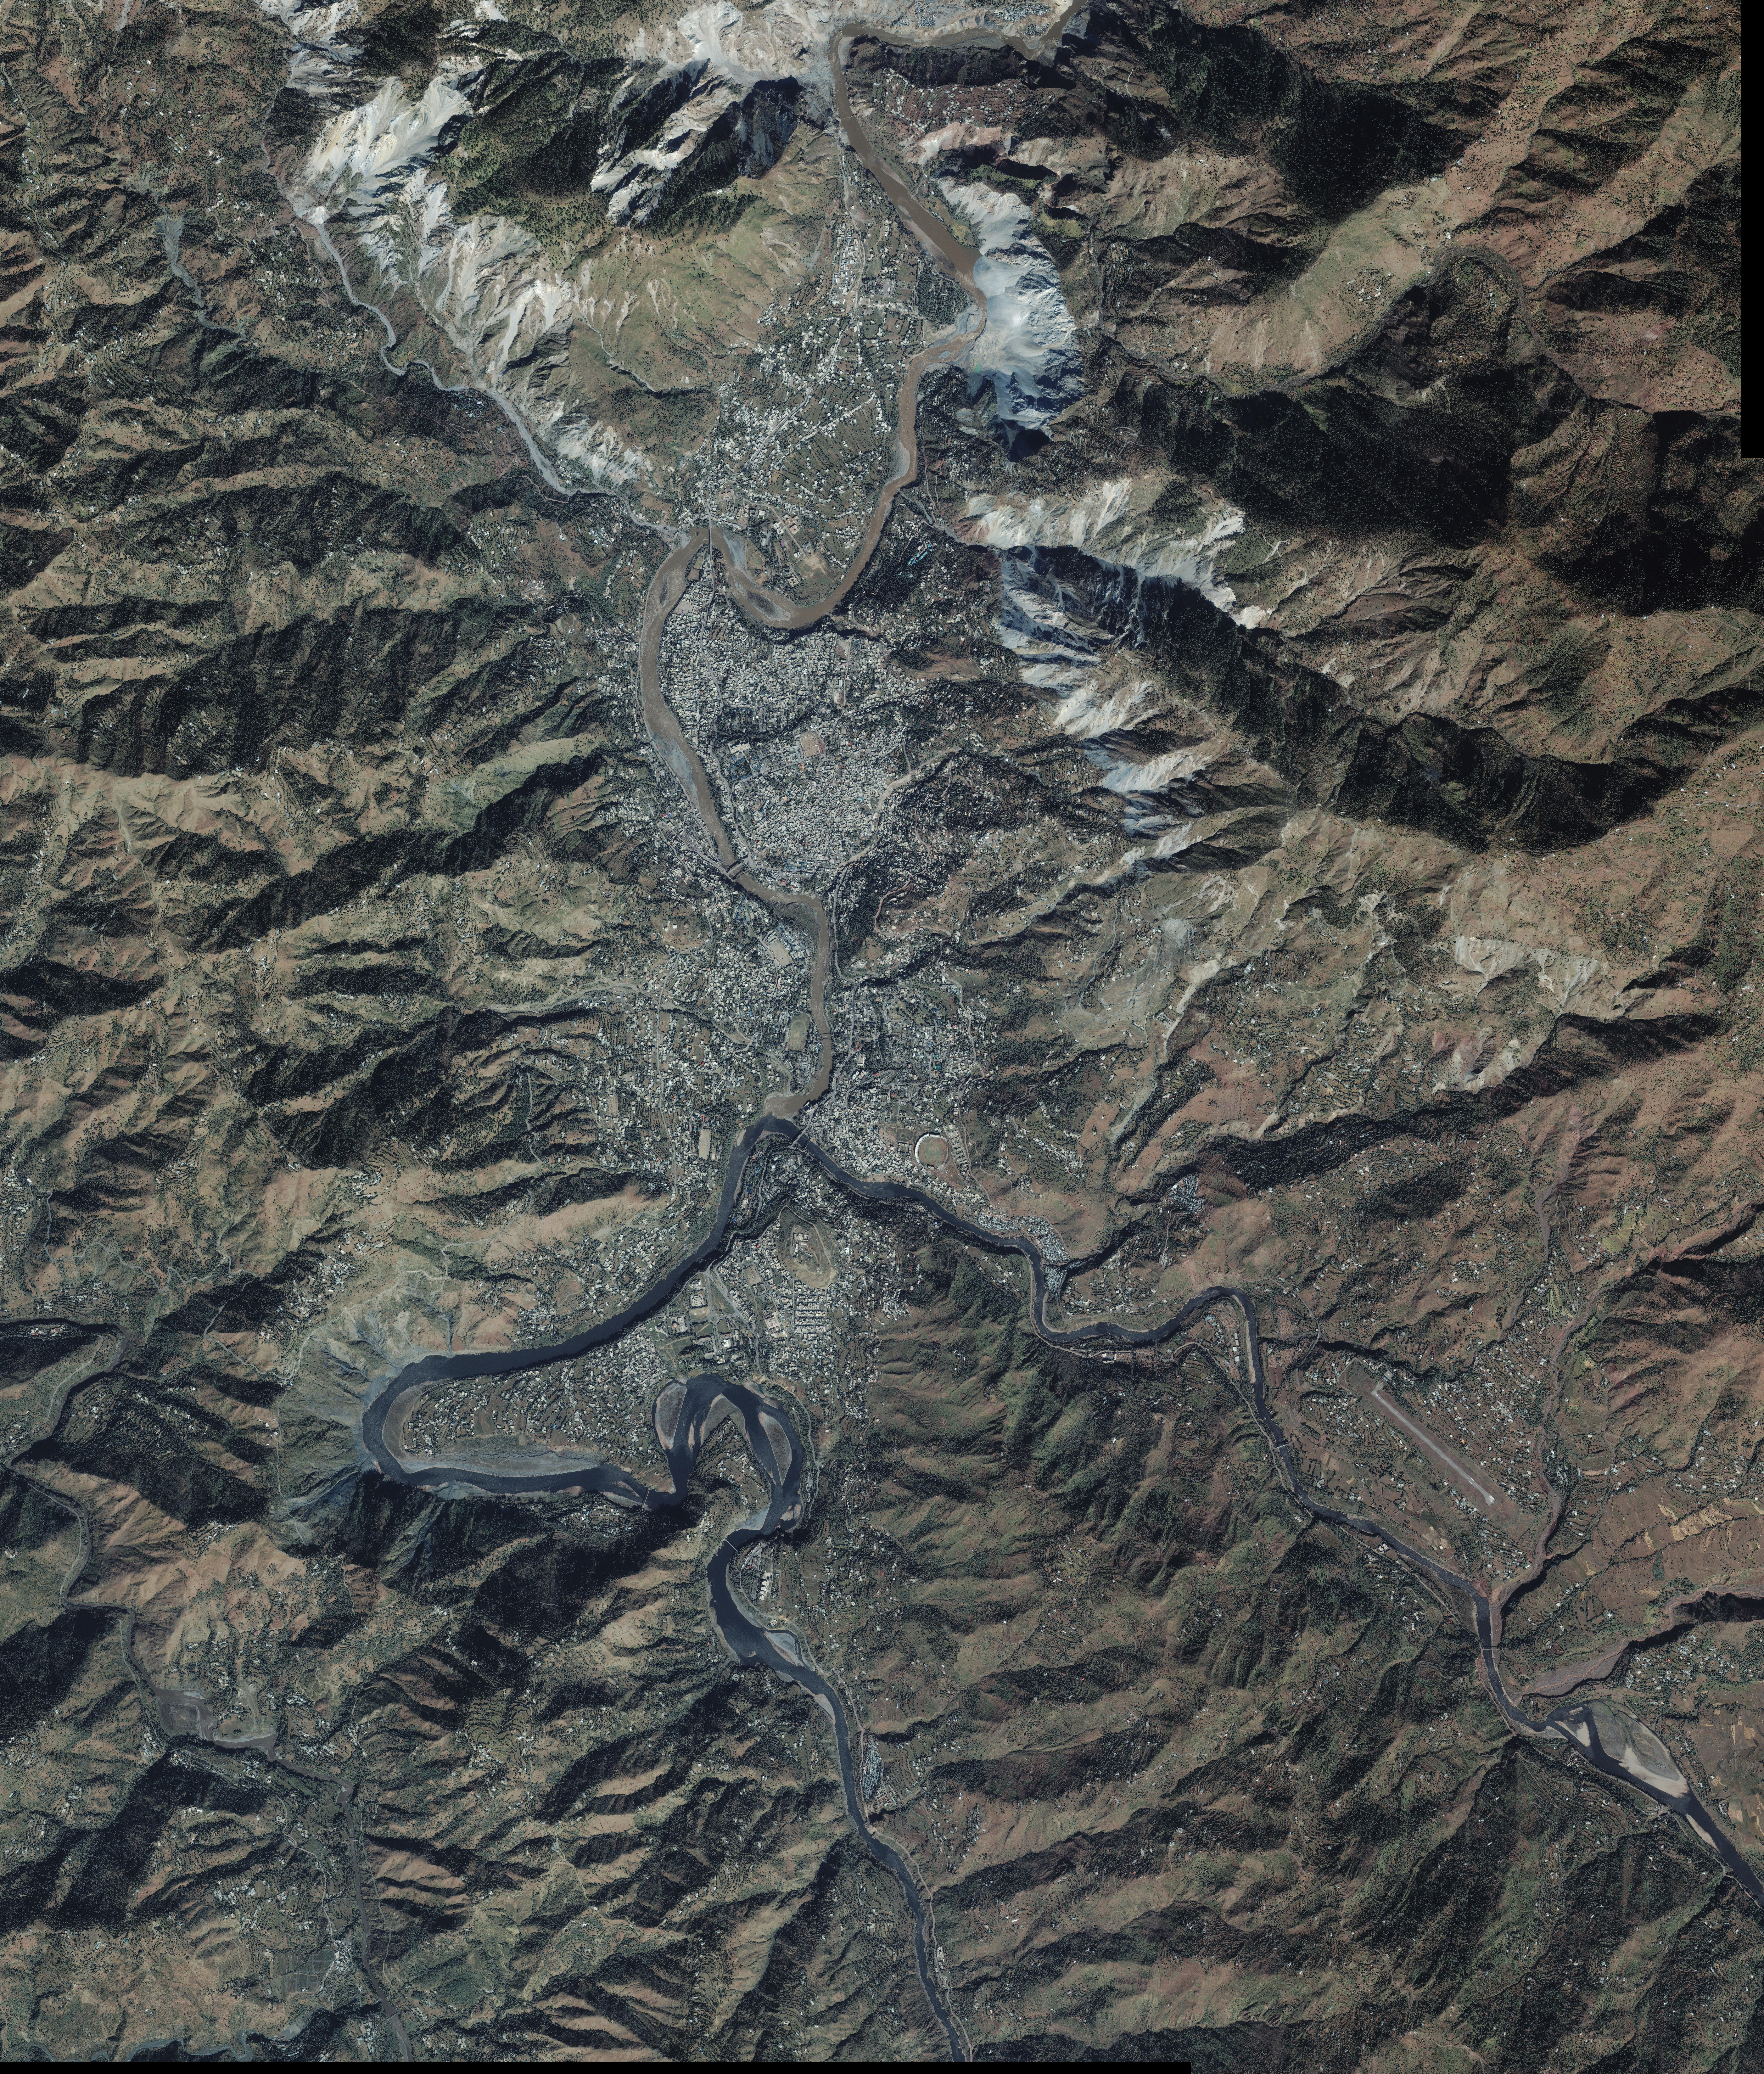 Landslide, Neelum River, Pakistan - related image preview